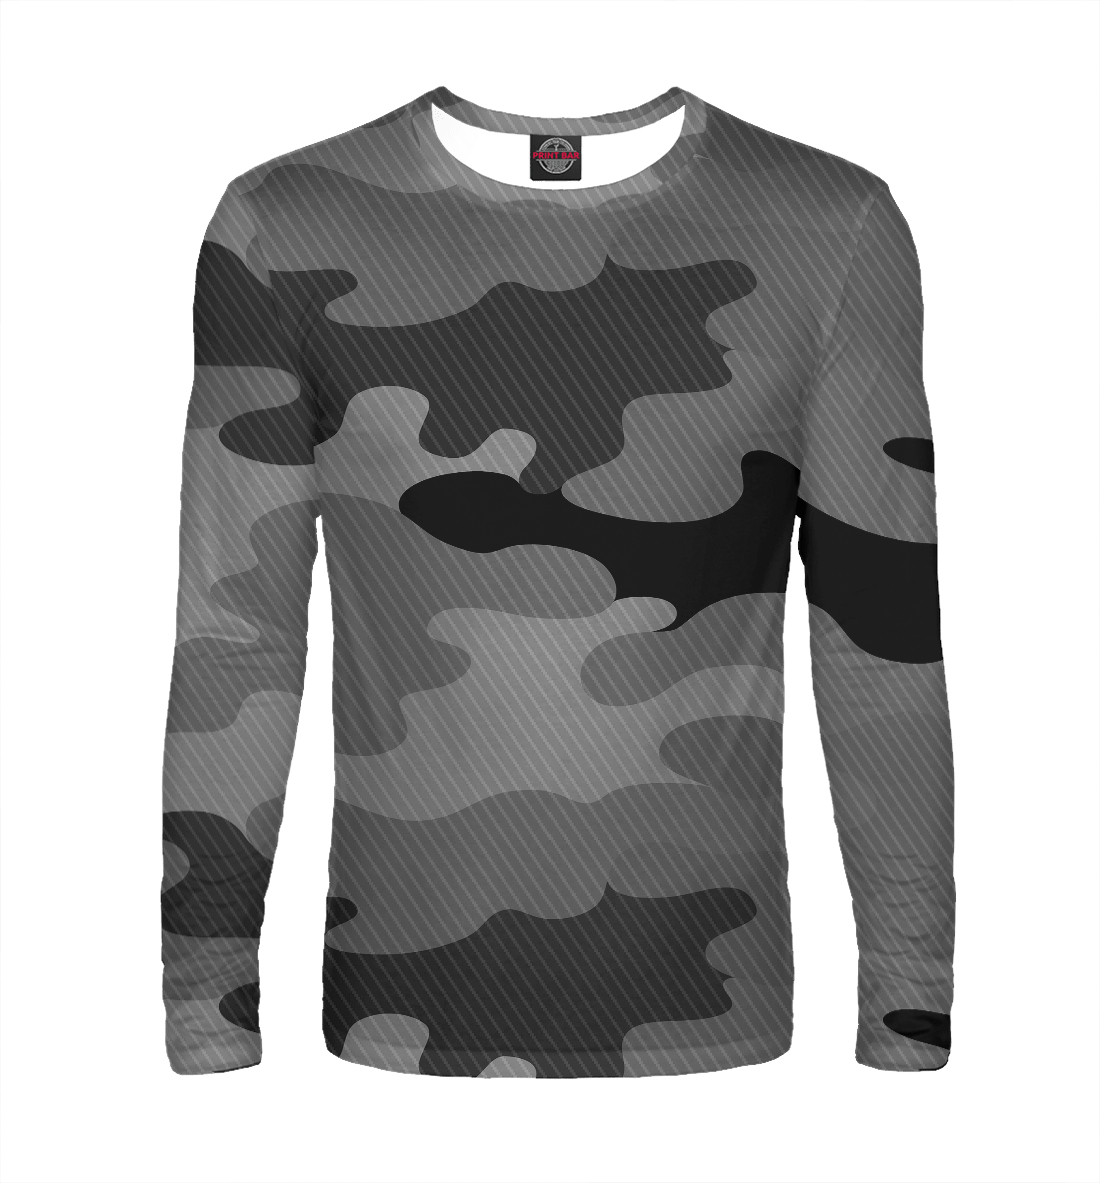 Мужской Лонгслив camouflage gray, артикул APD-131416-lon-2mp